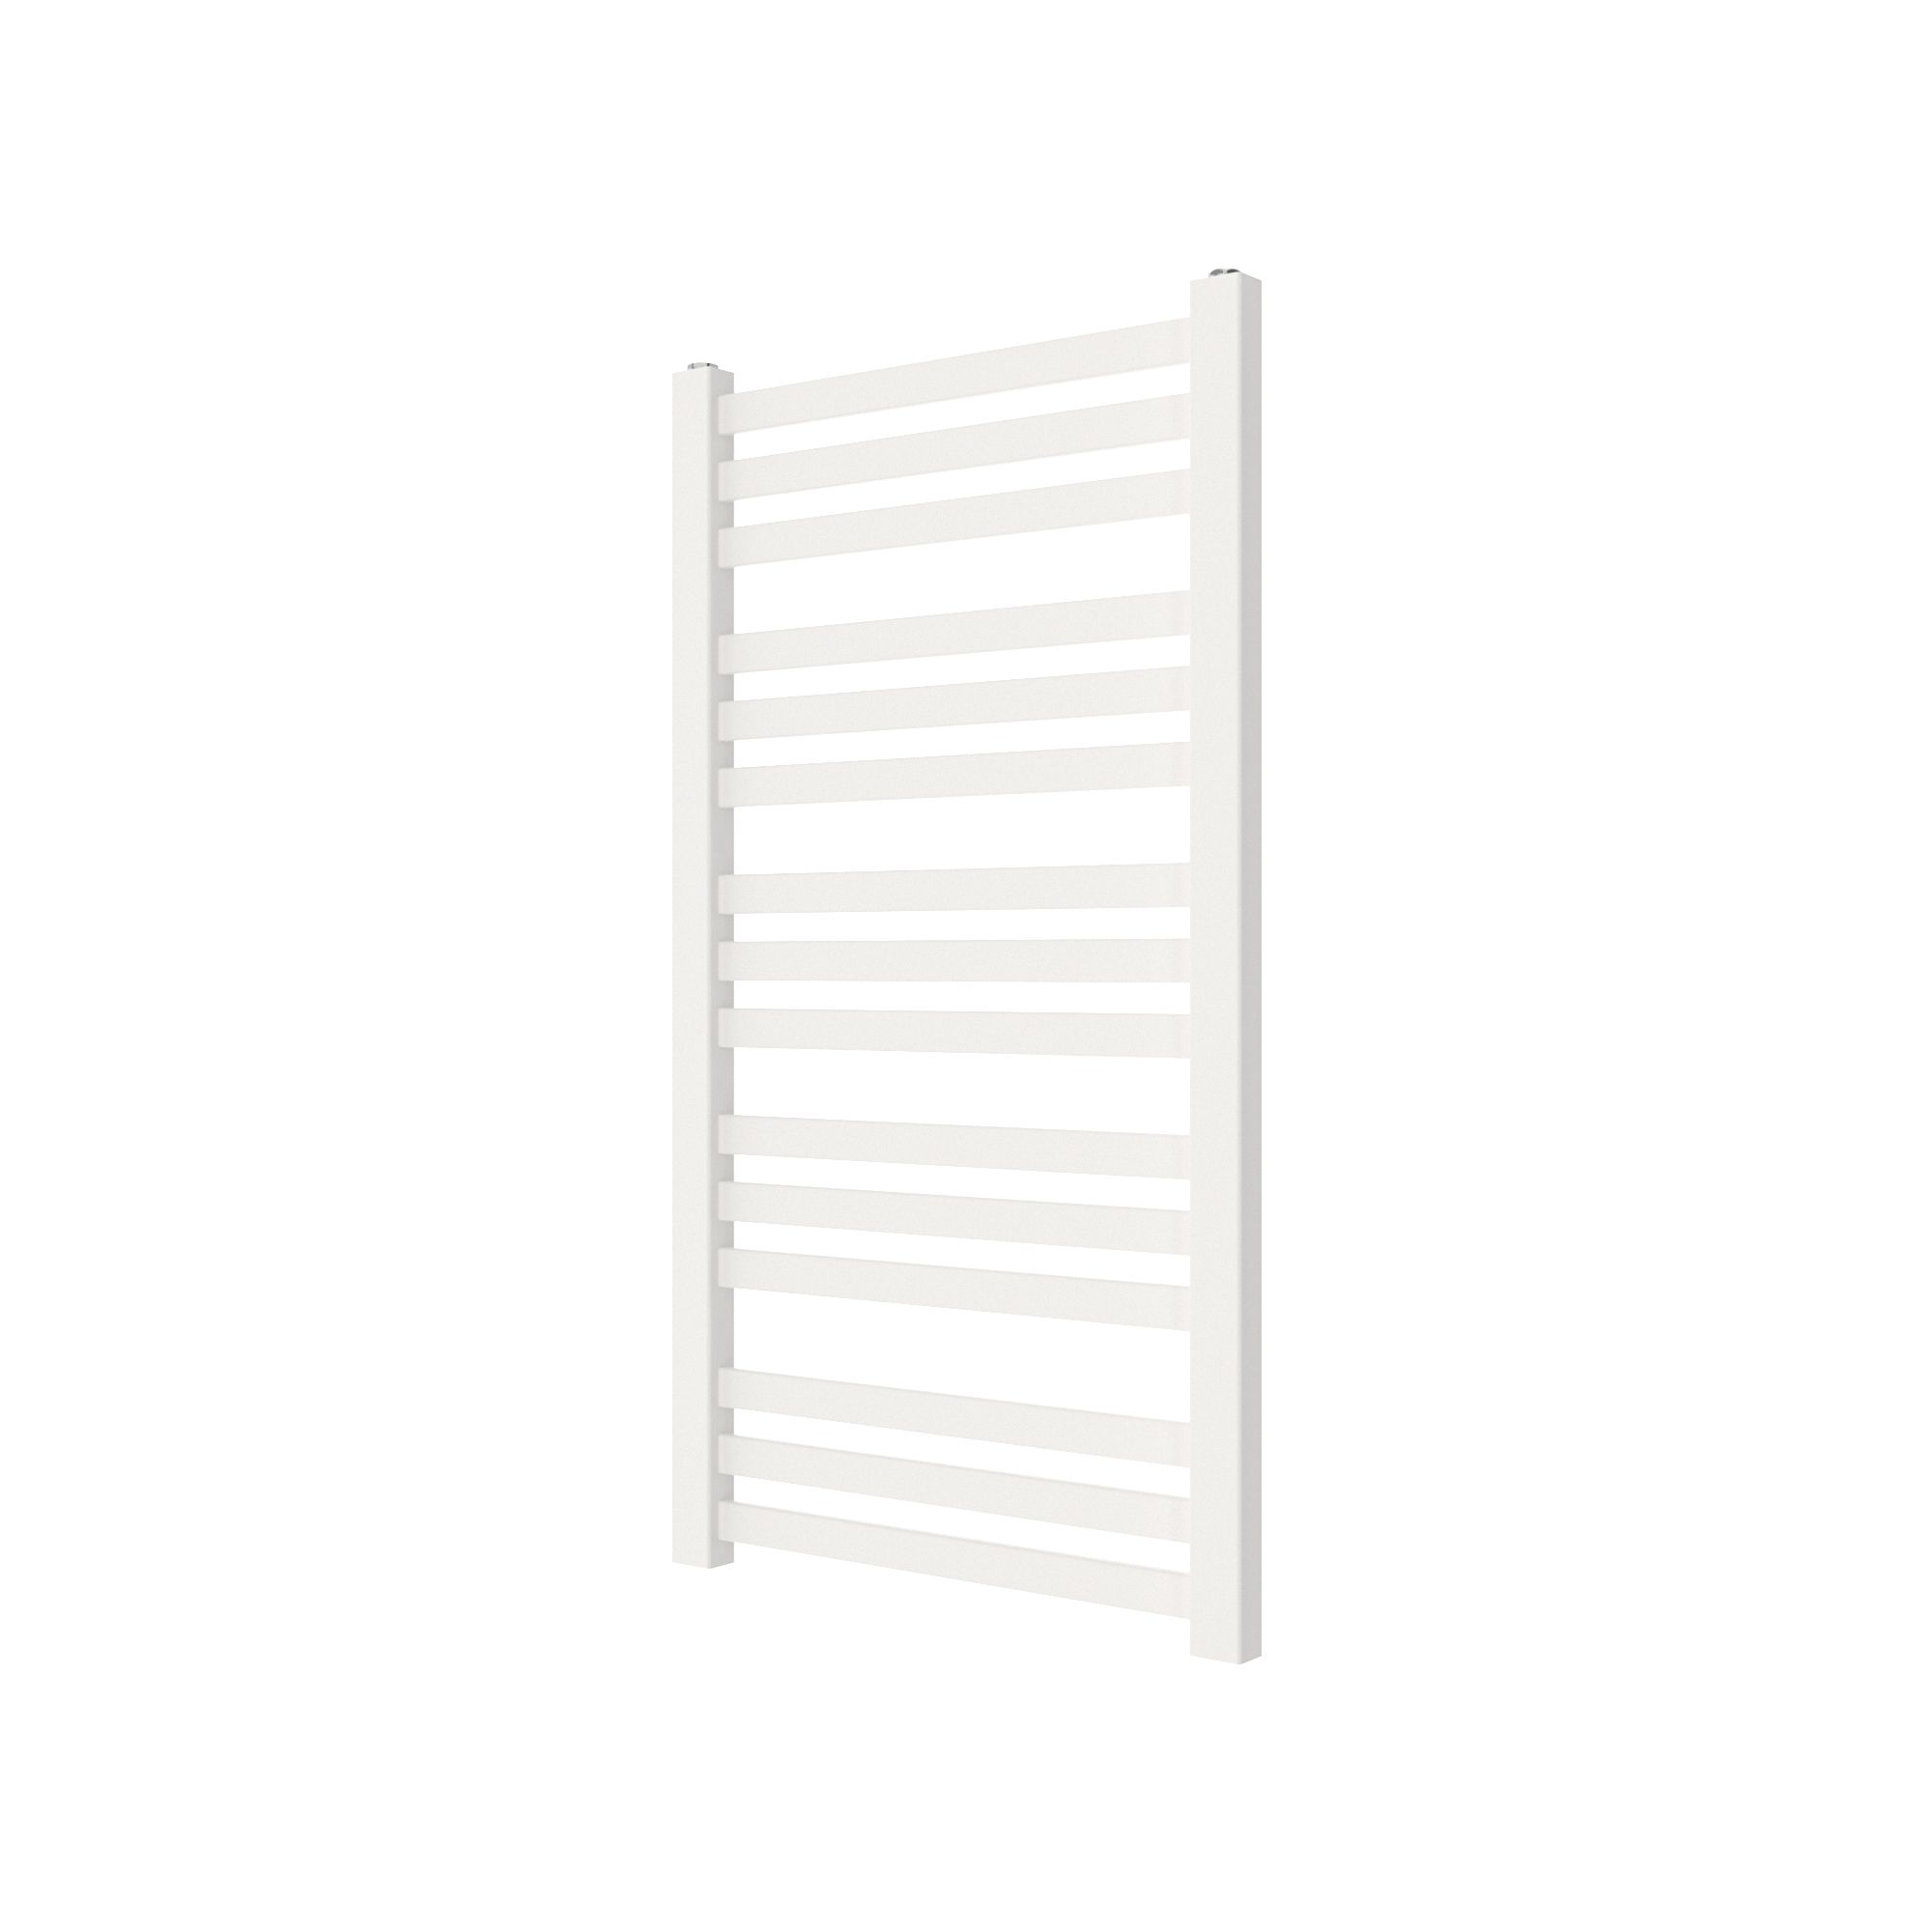 GoodHome Wolfsbane, White Vertical Flat Towel radiator (W)500mm x (H)900mm